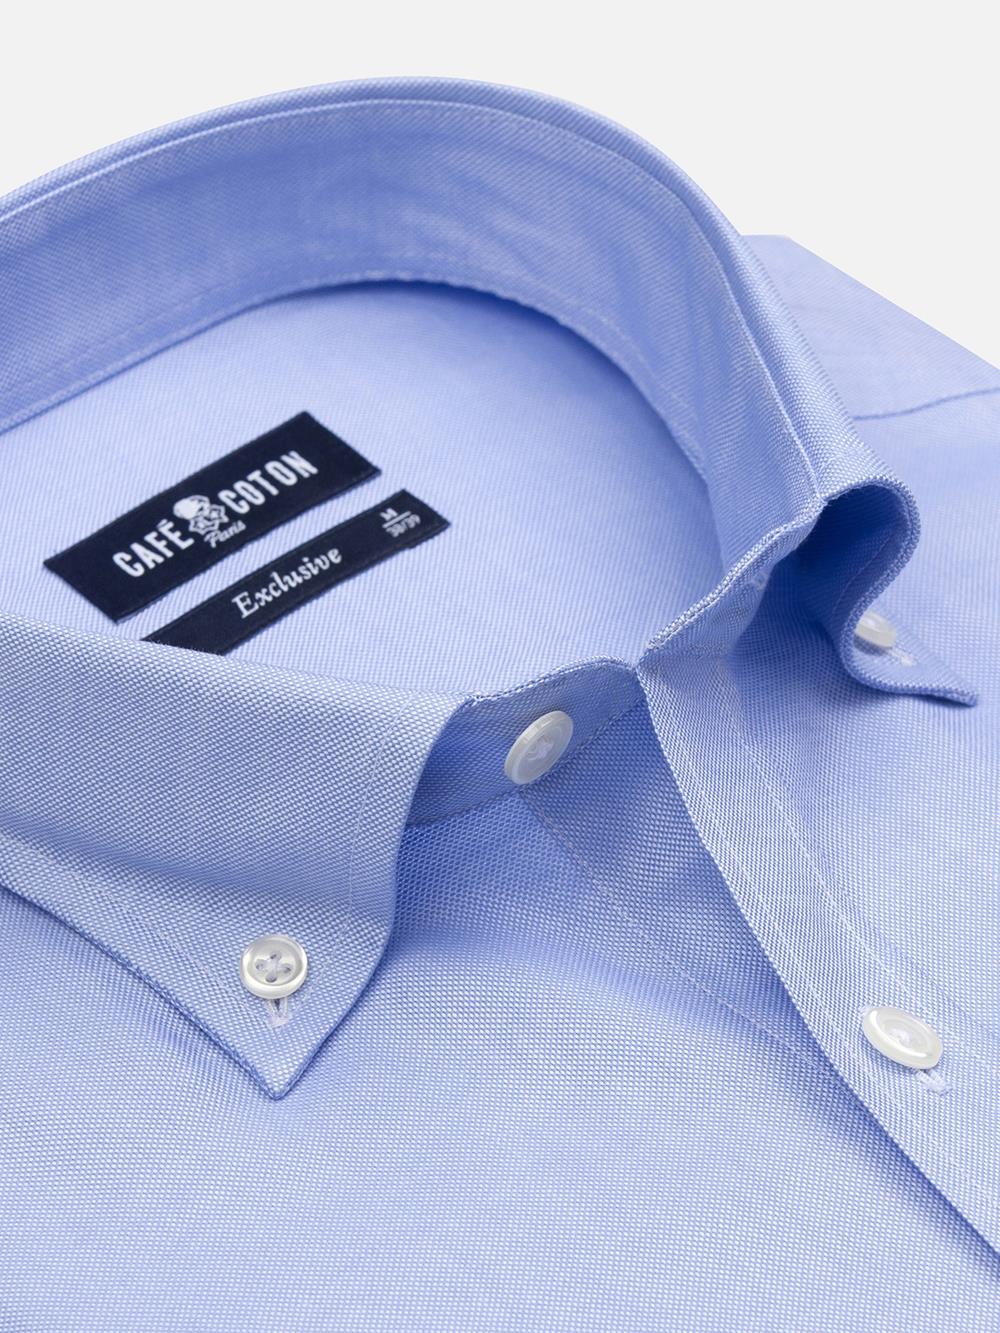 Sky oxford slim fit shirt - Button down collar